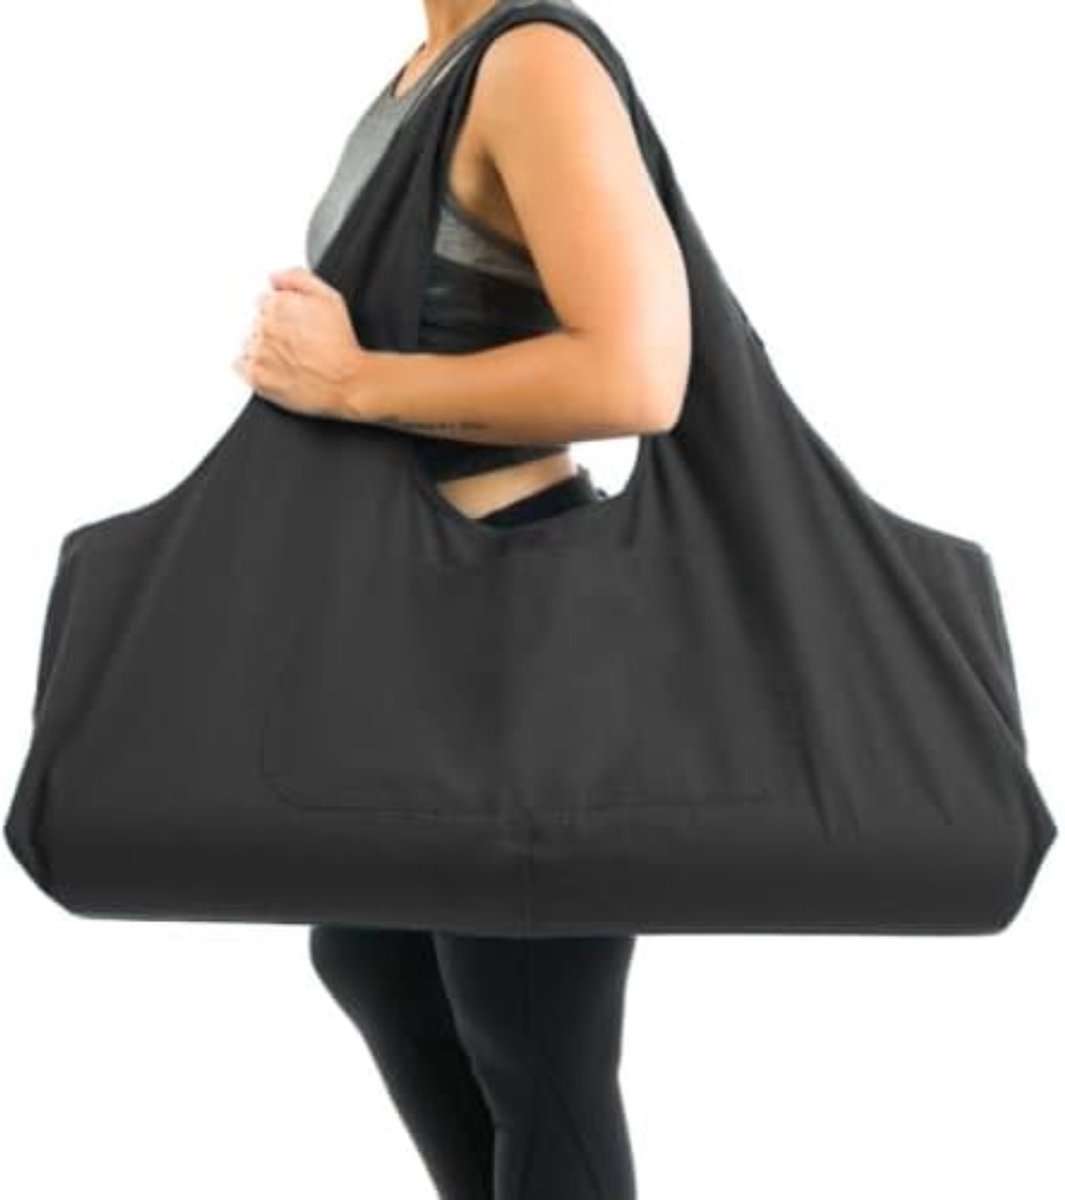 Velox Yogamat tas - Yogatas groot - Yoga mat tas - Obsidiaan zwart